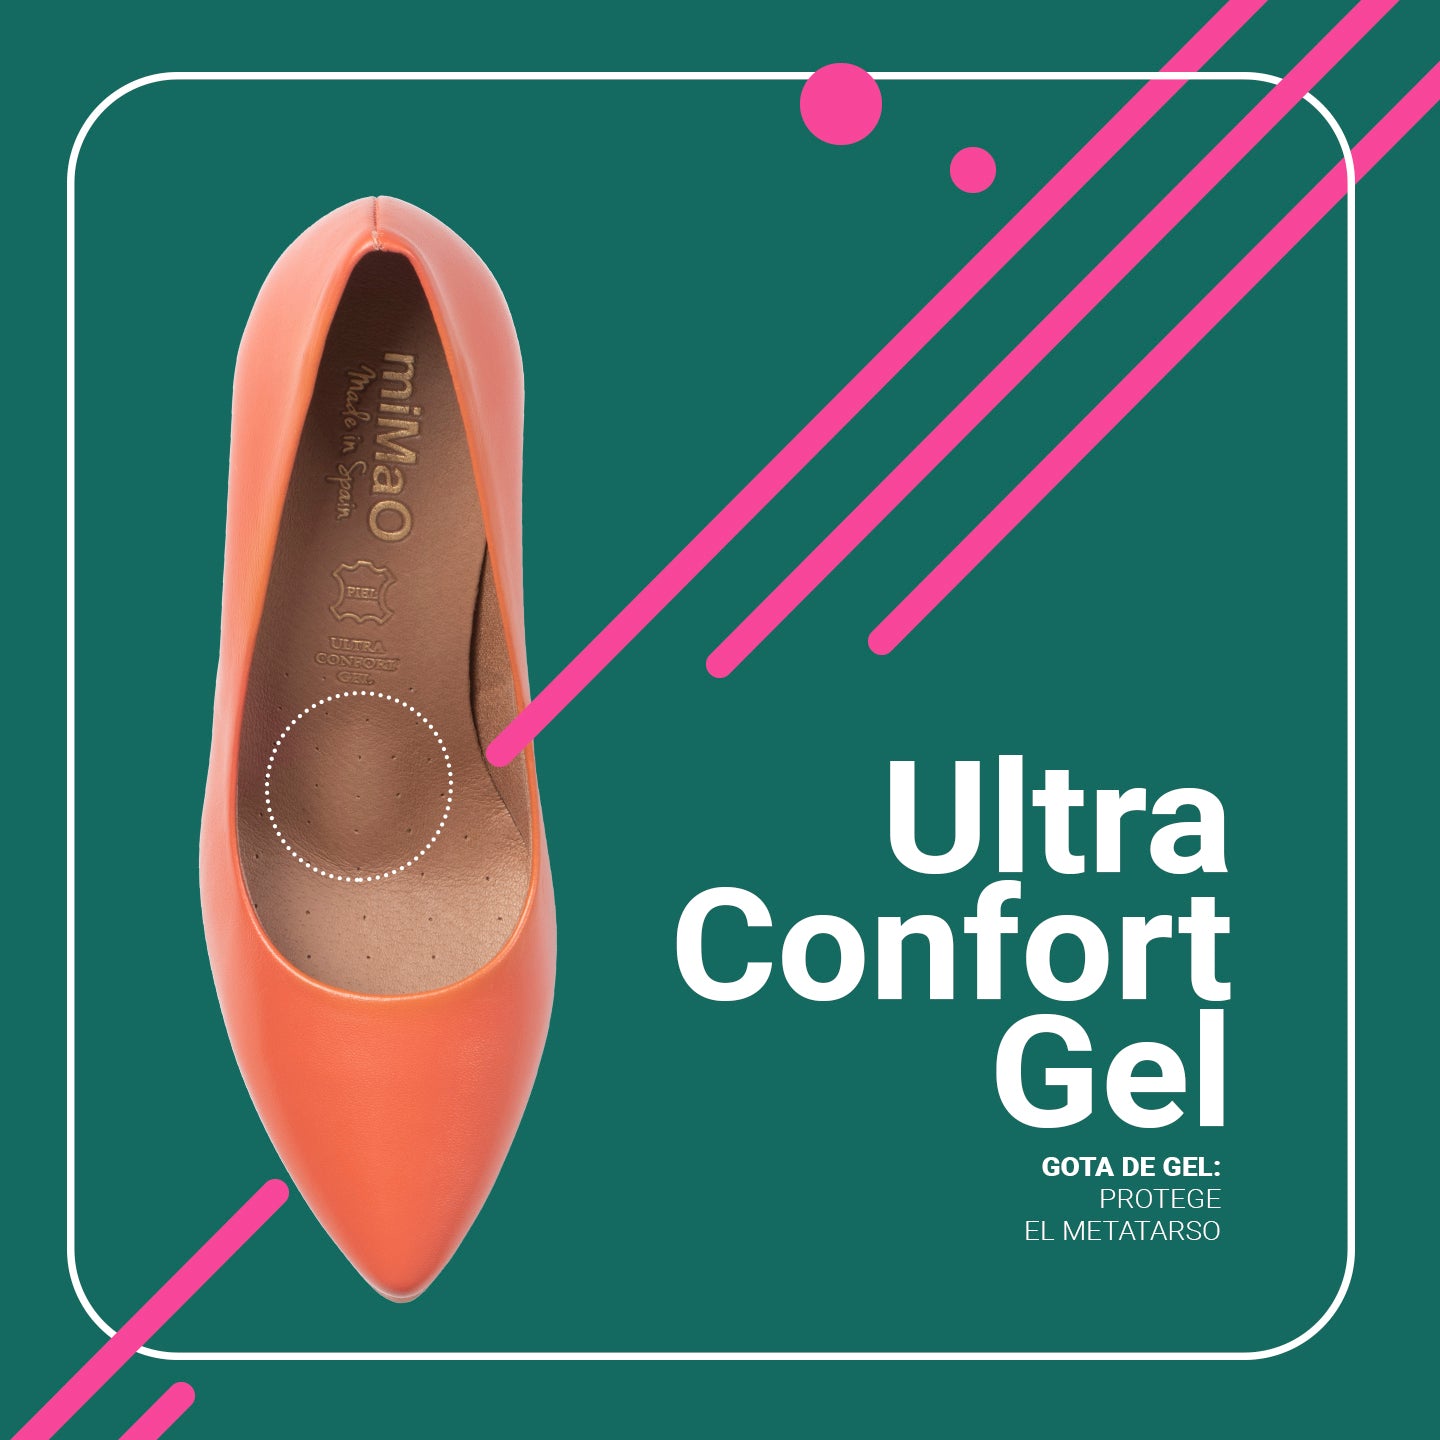 URBAN S SALON – GREEN nappa leather mid heels